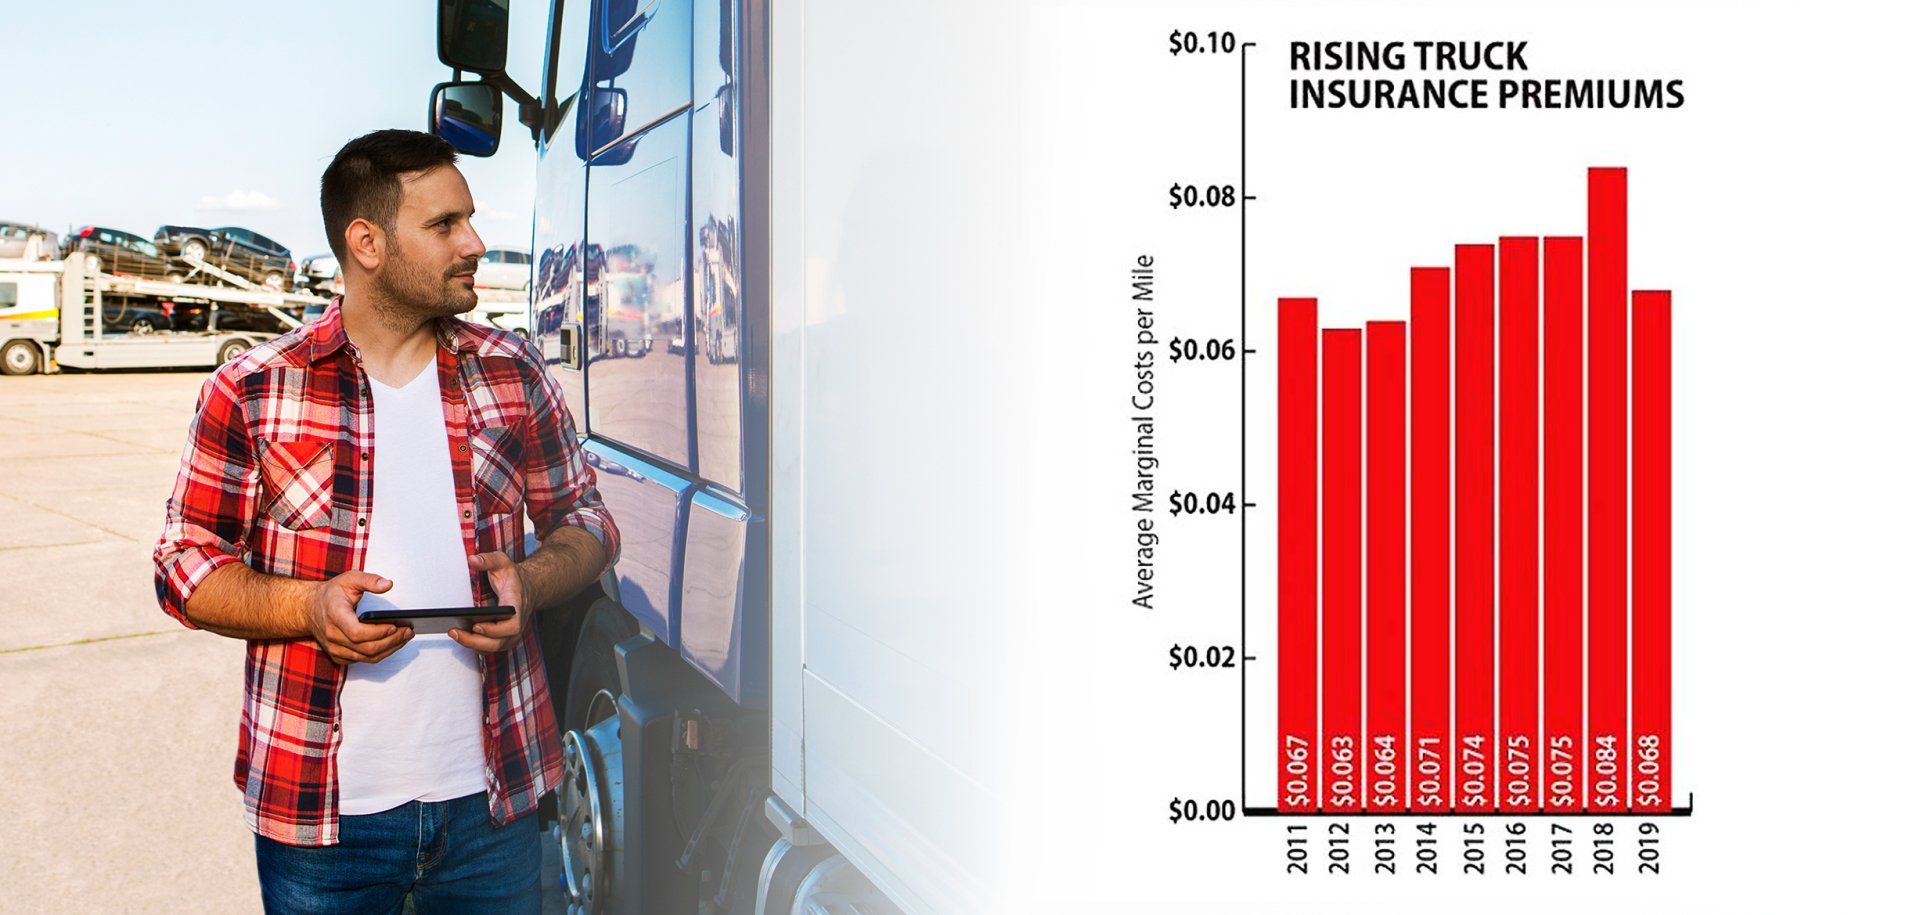 Rising truck insurance premiums